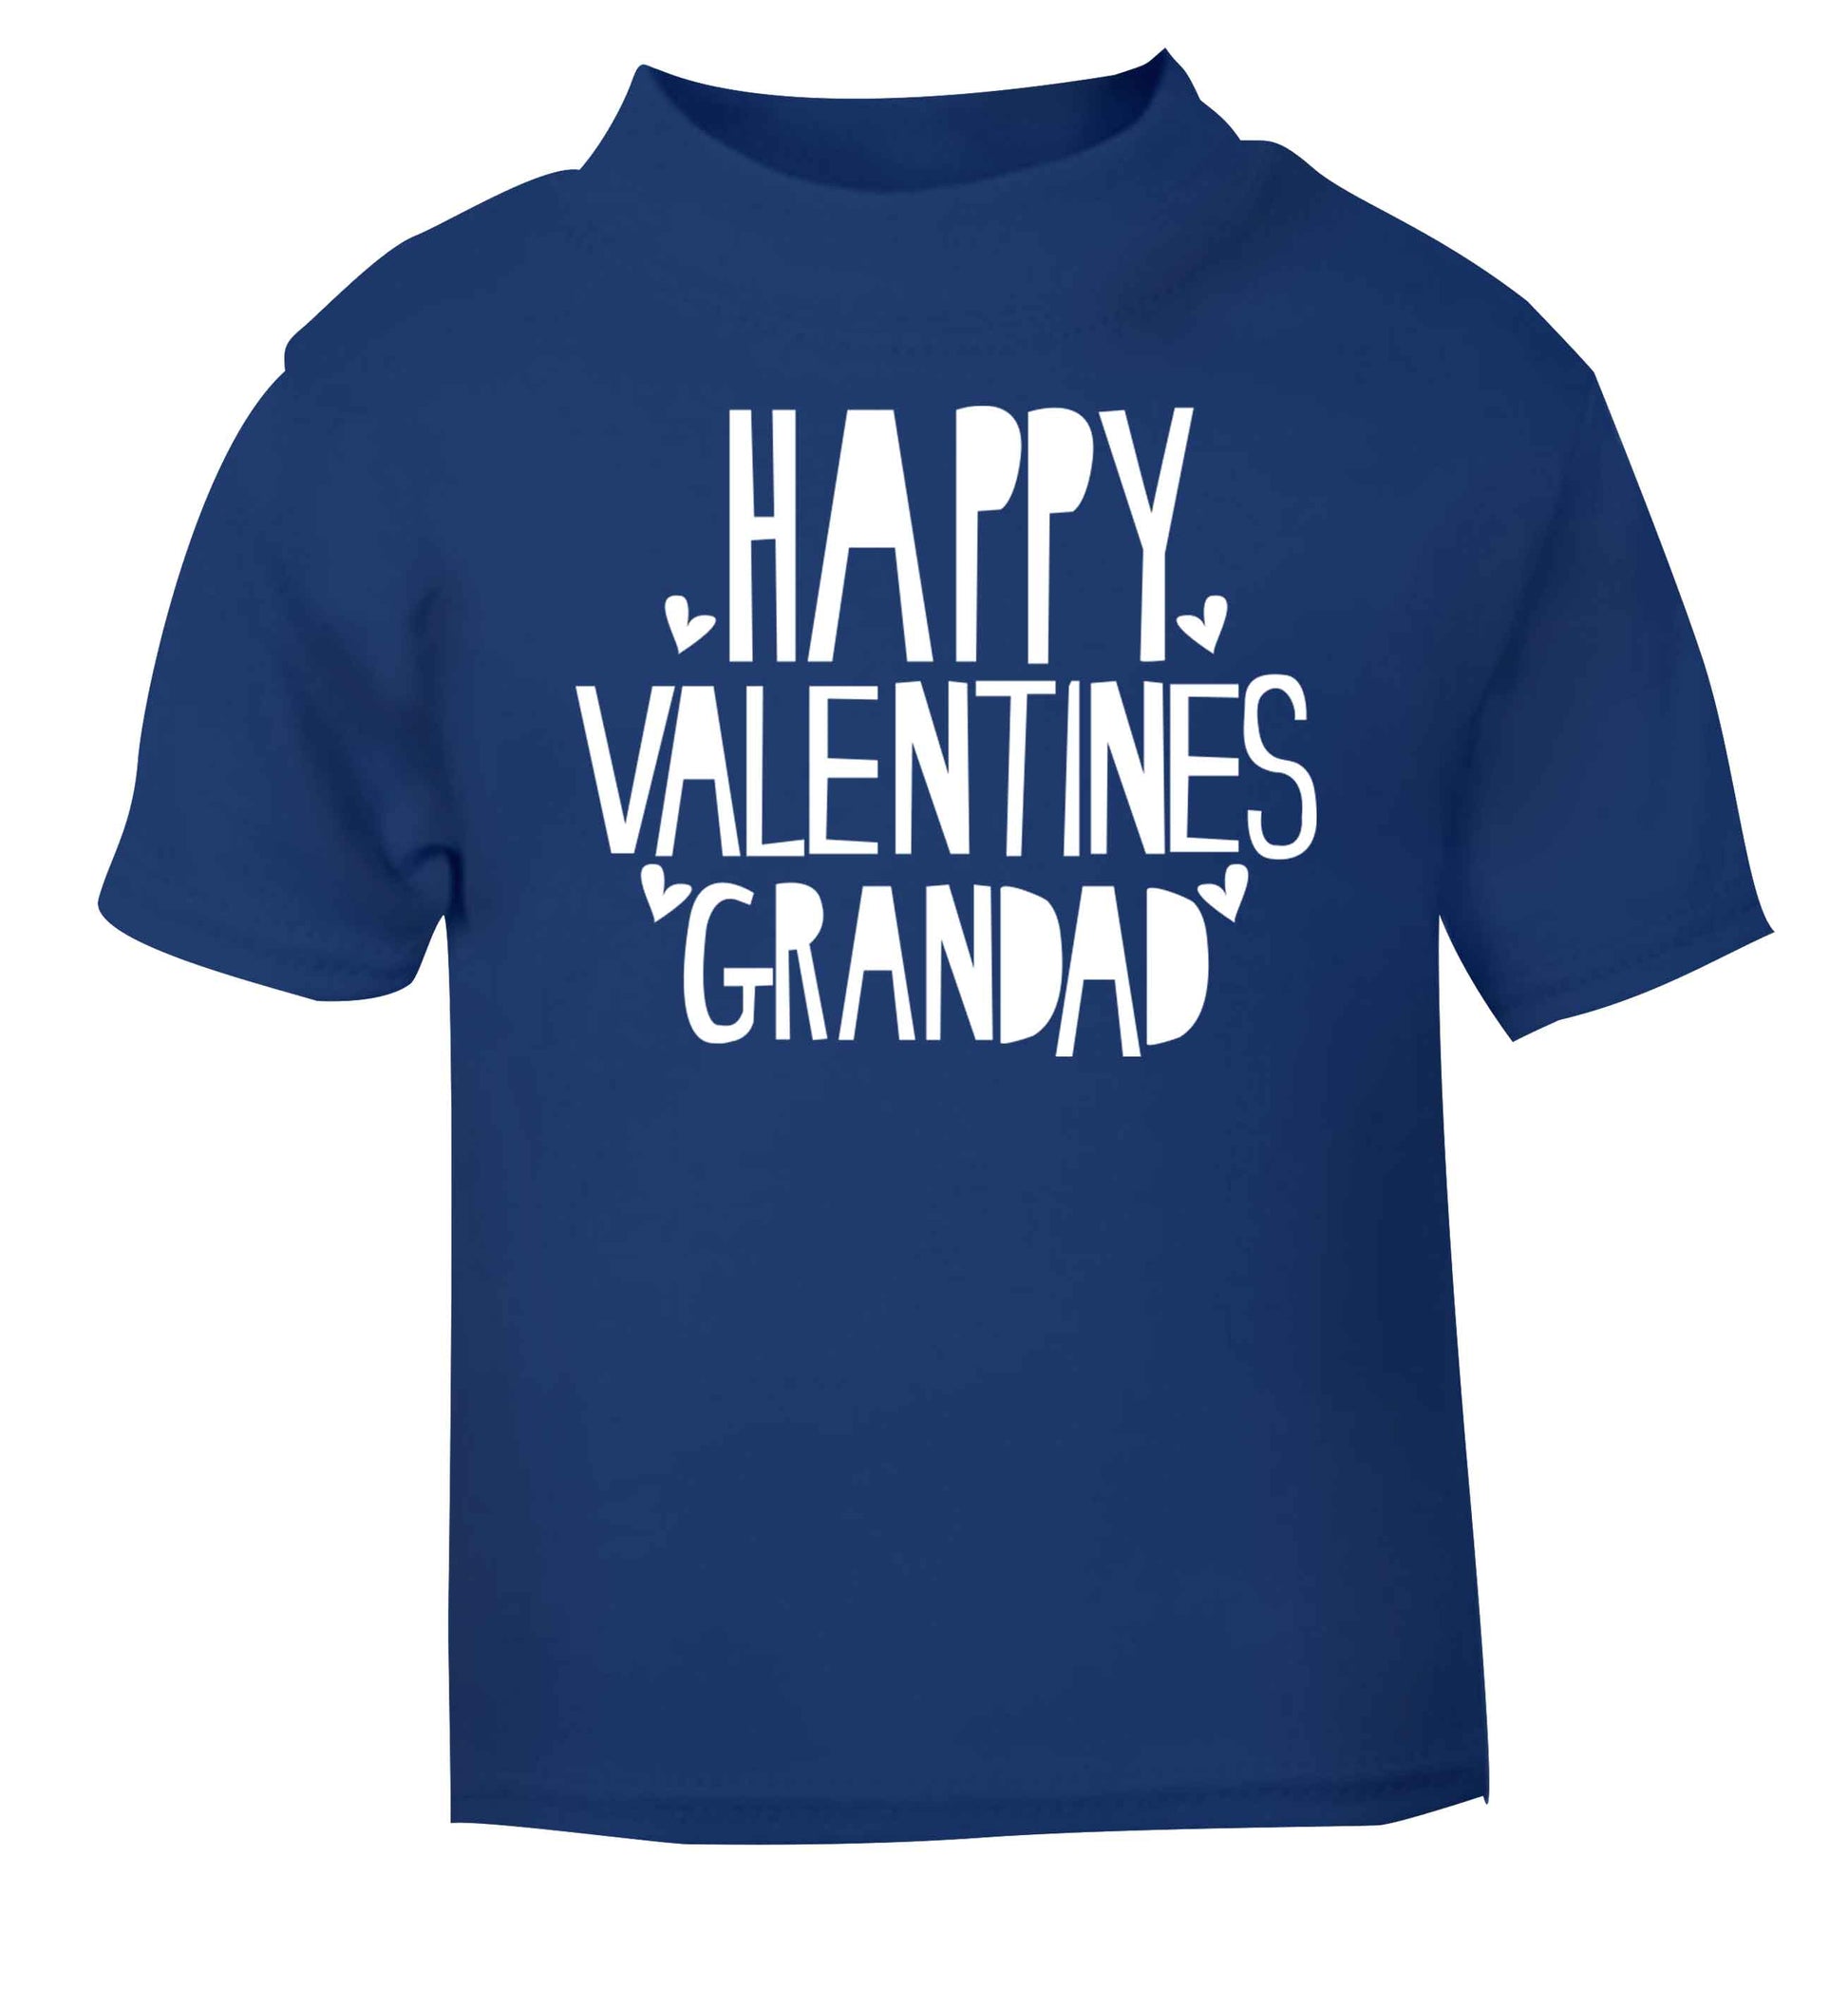 Happy valentines grandad blue baby toddler Tshirt 2 Years